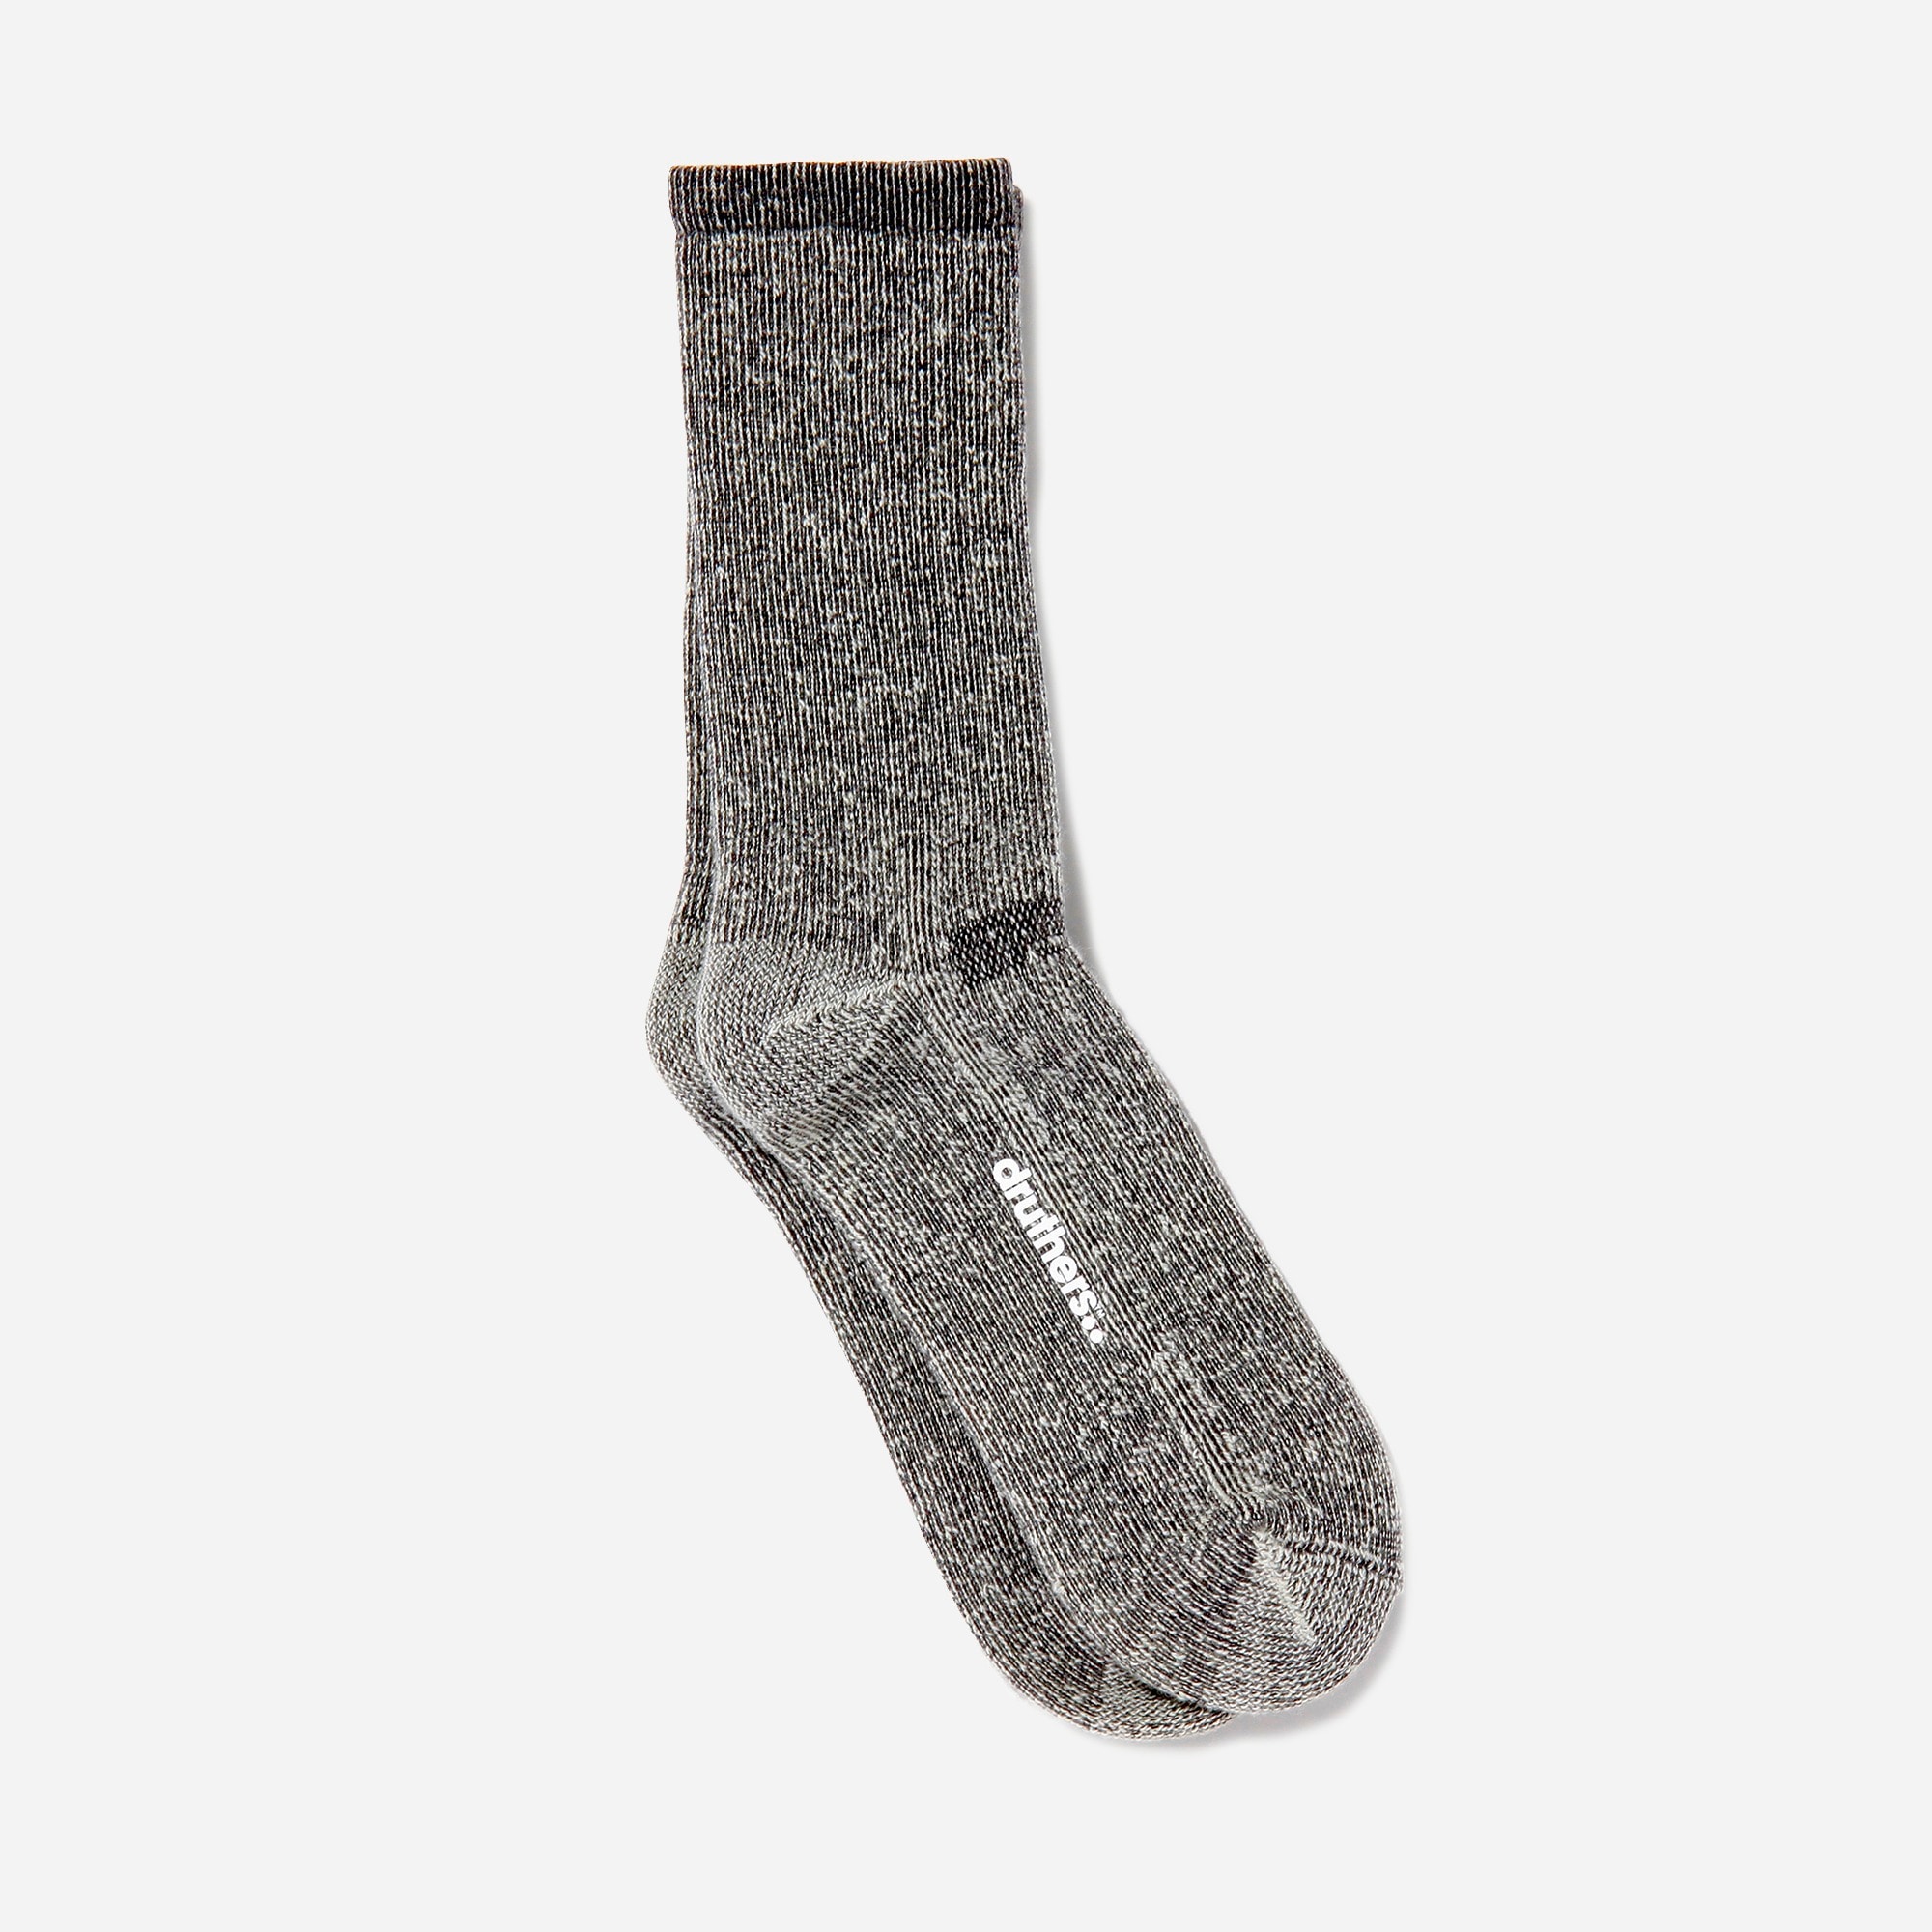  Druthers™ merino wool boot socks